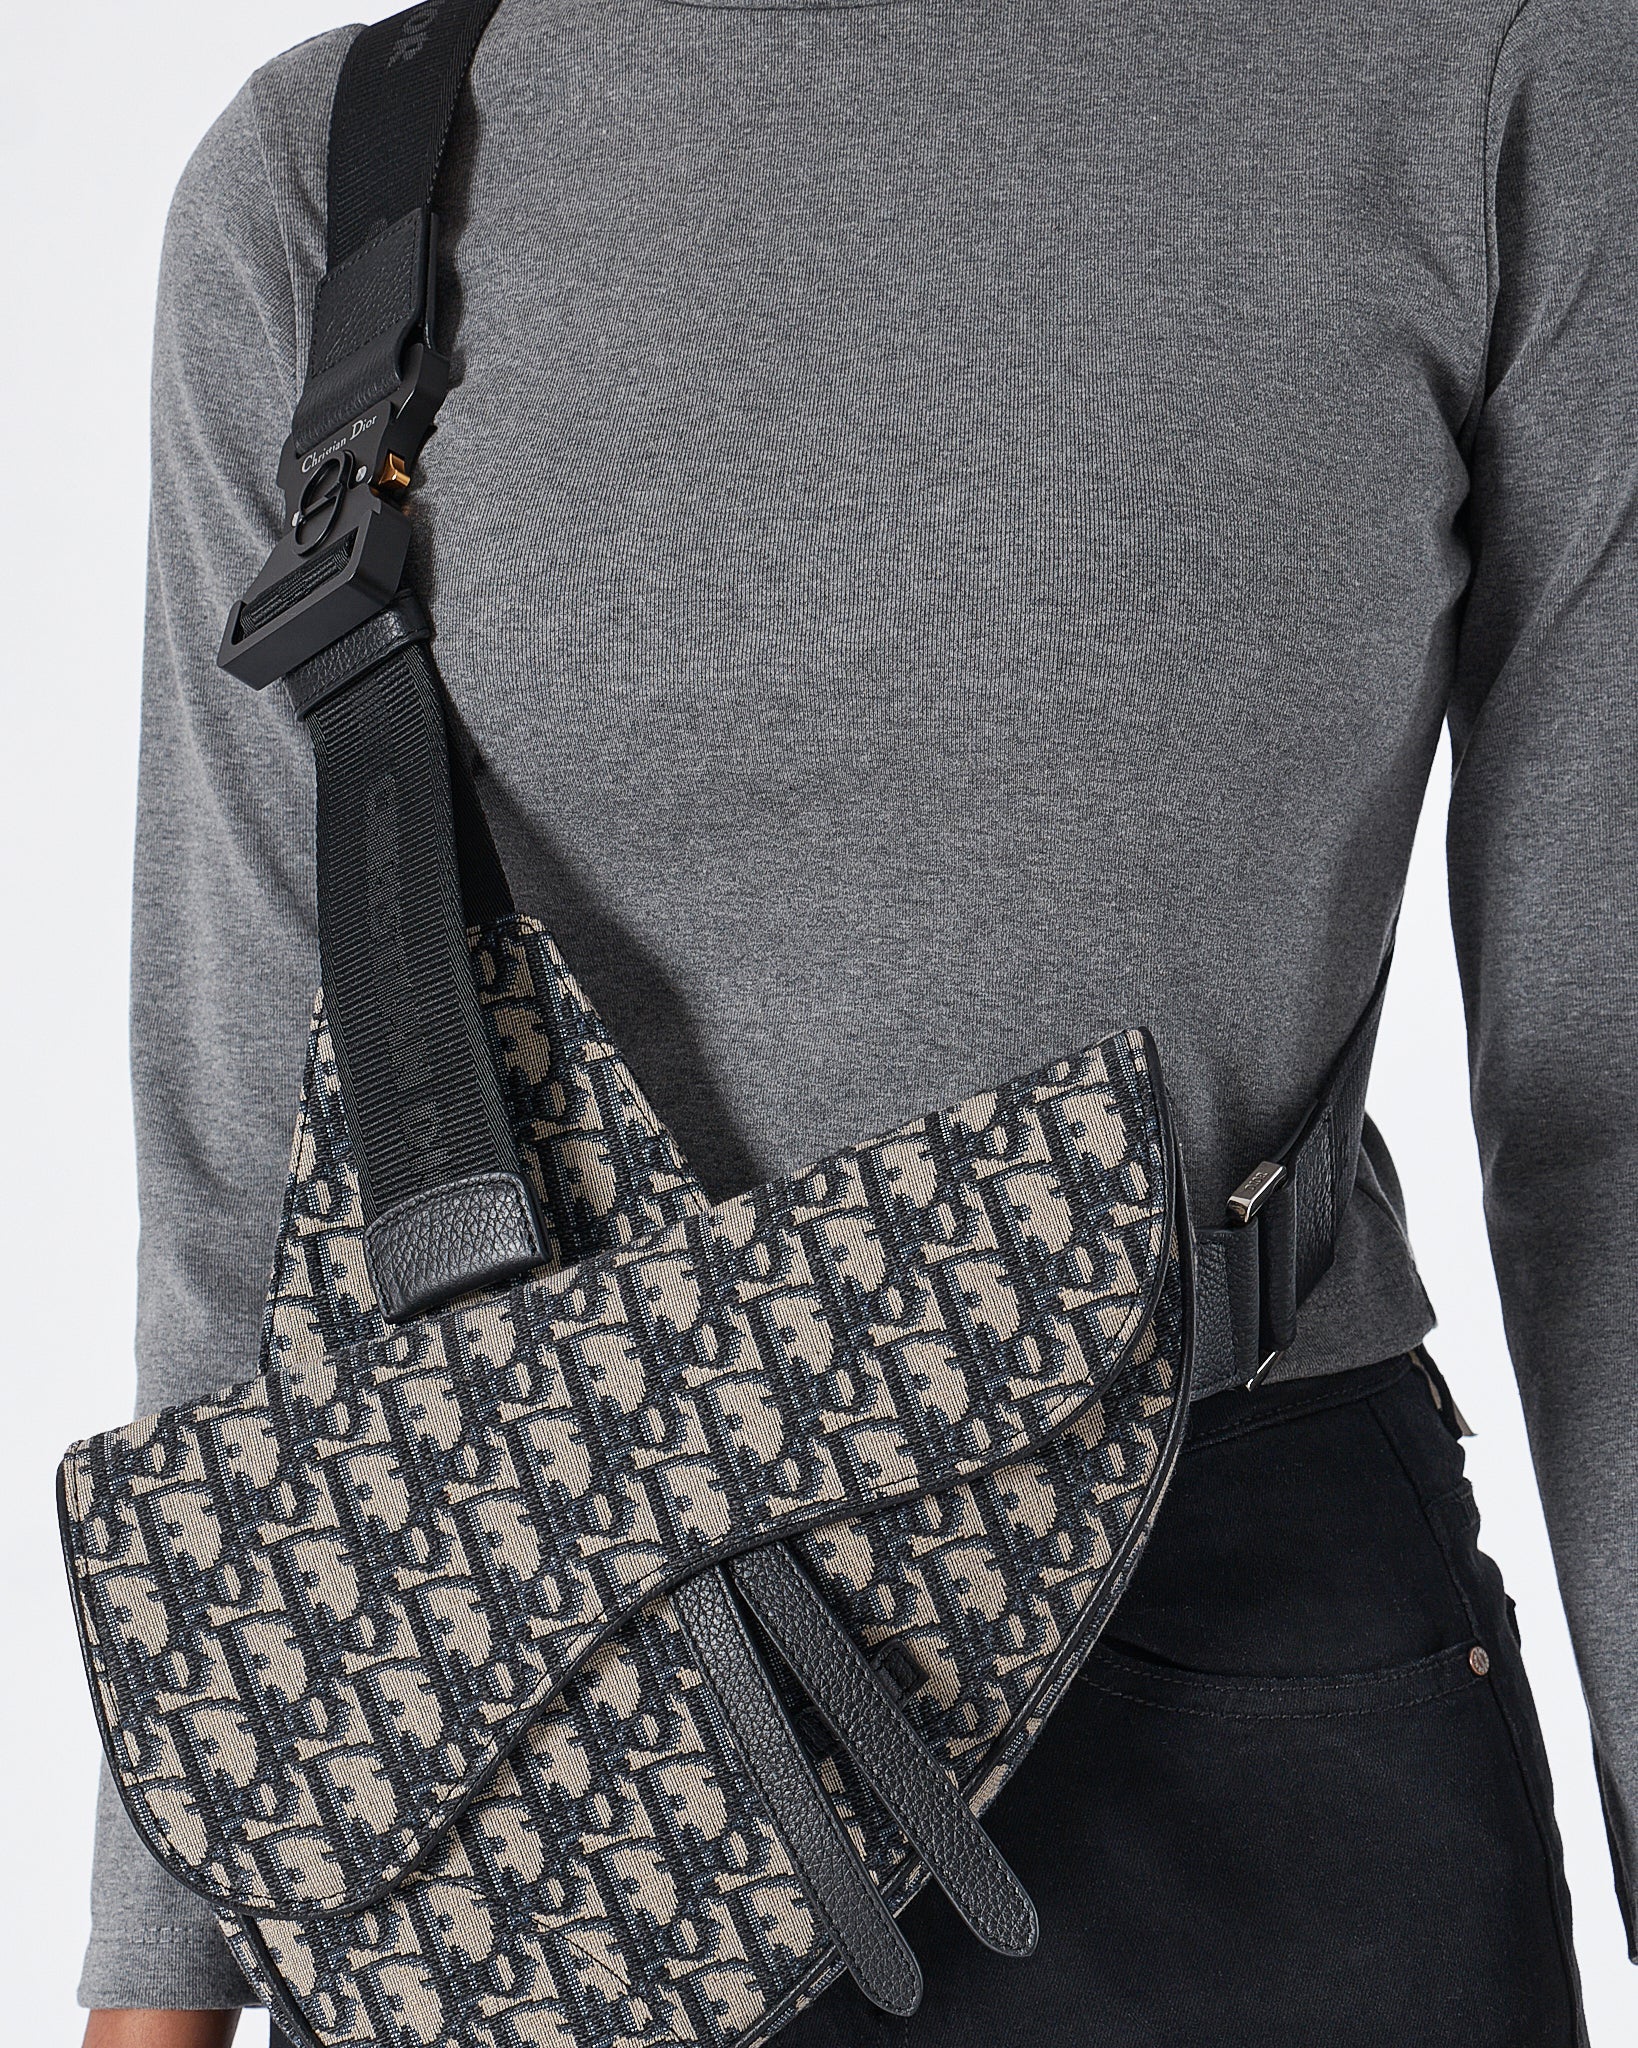 MOI OUTFIT-Dior Saddle Bag 219